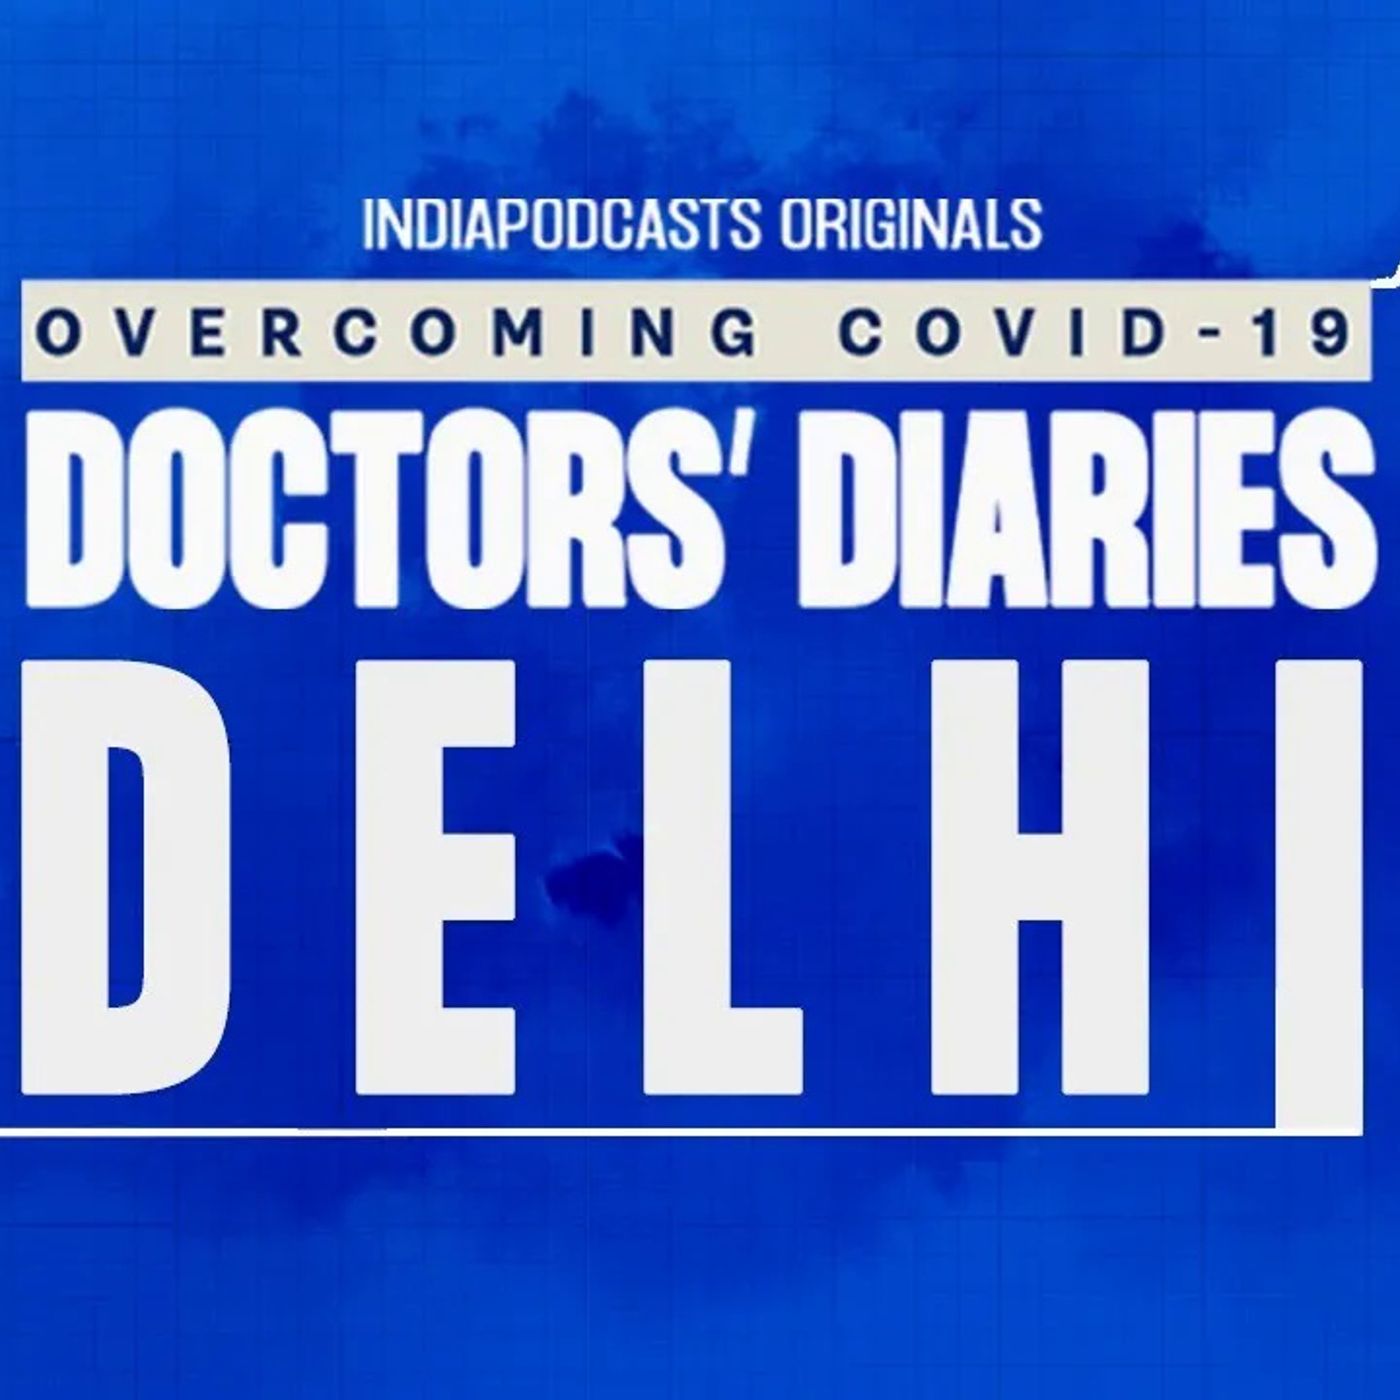 Delhi Front-line Doctors' Stories Of COVID-19 | Doctors' Diaries- Season 2 | IndiaPodcasts Originals